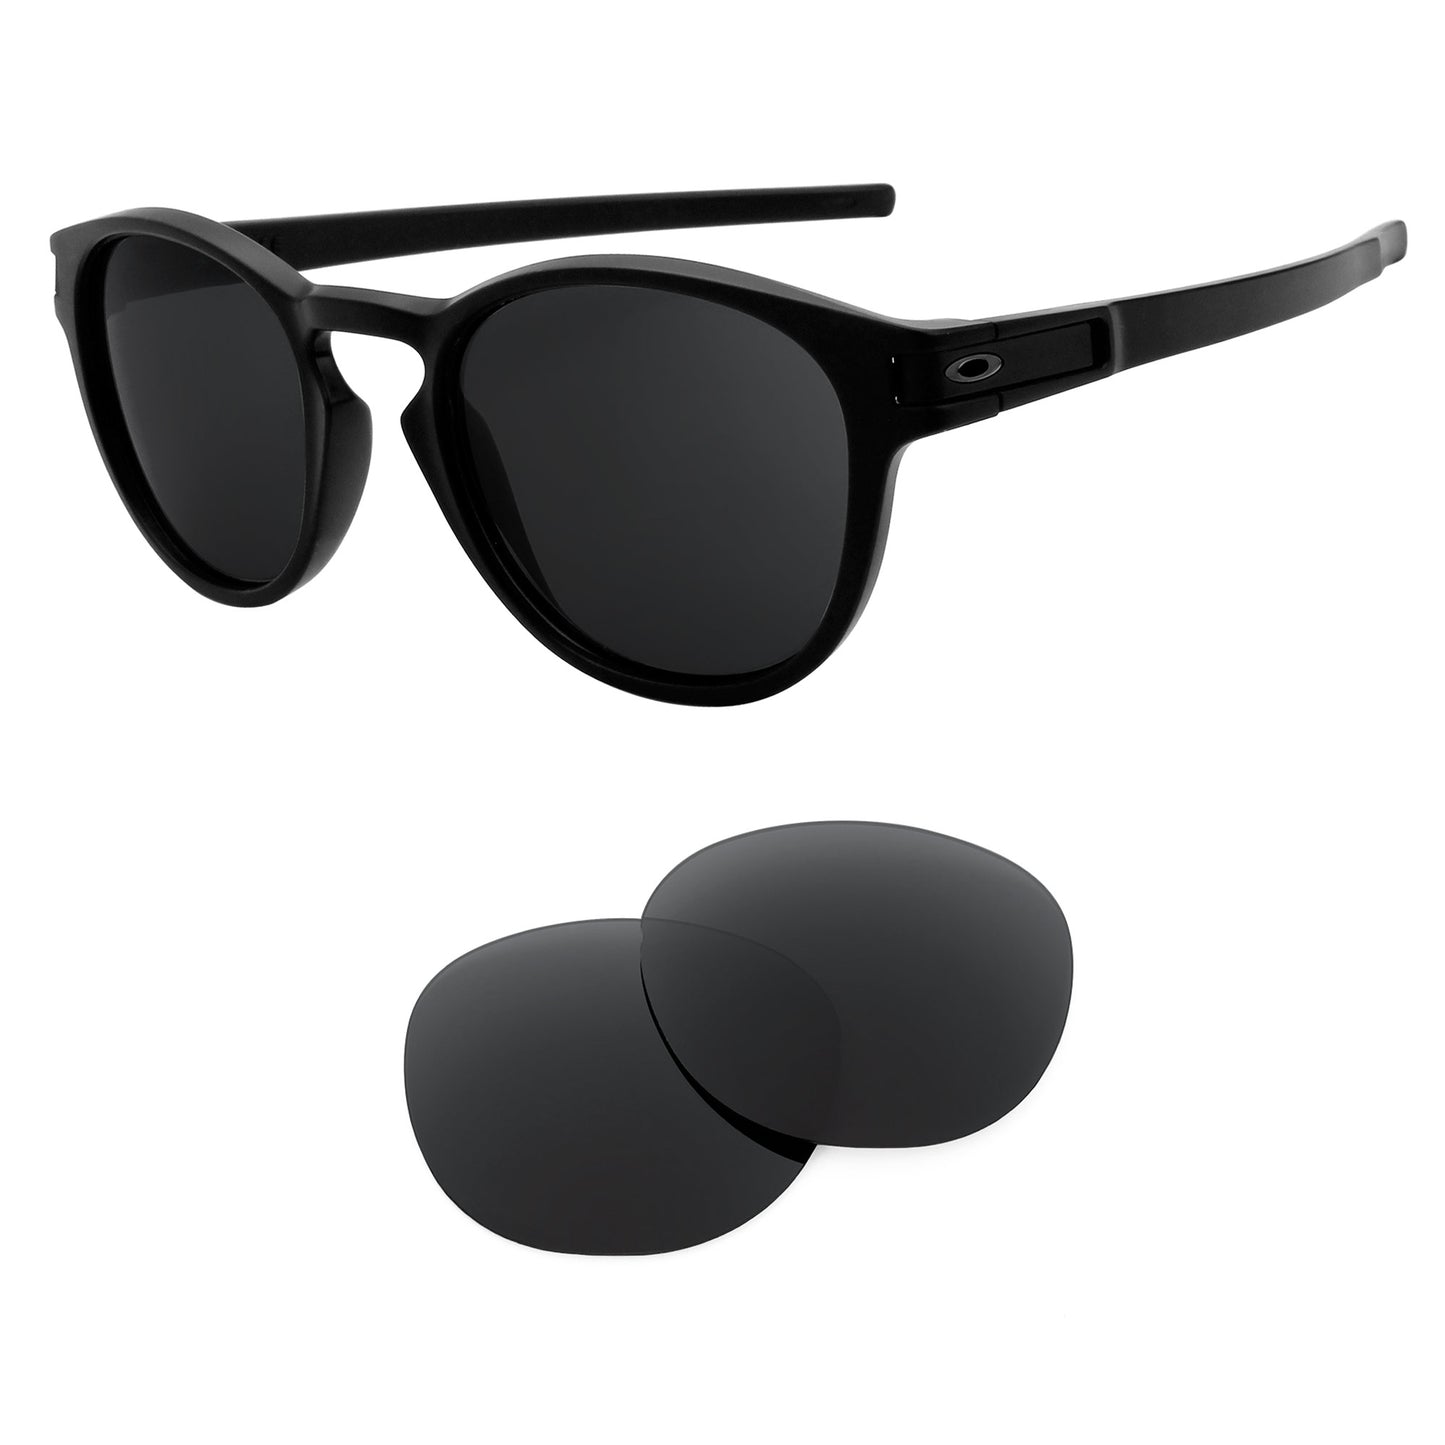 Oakley Latch (Low Bridge Fit) sunglasses with replacement lenses